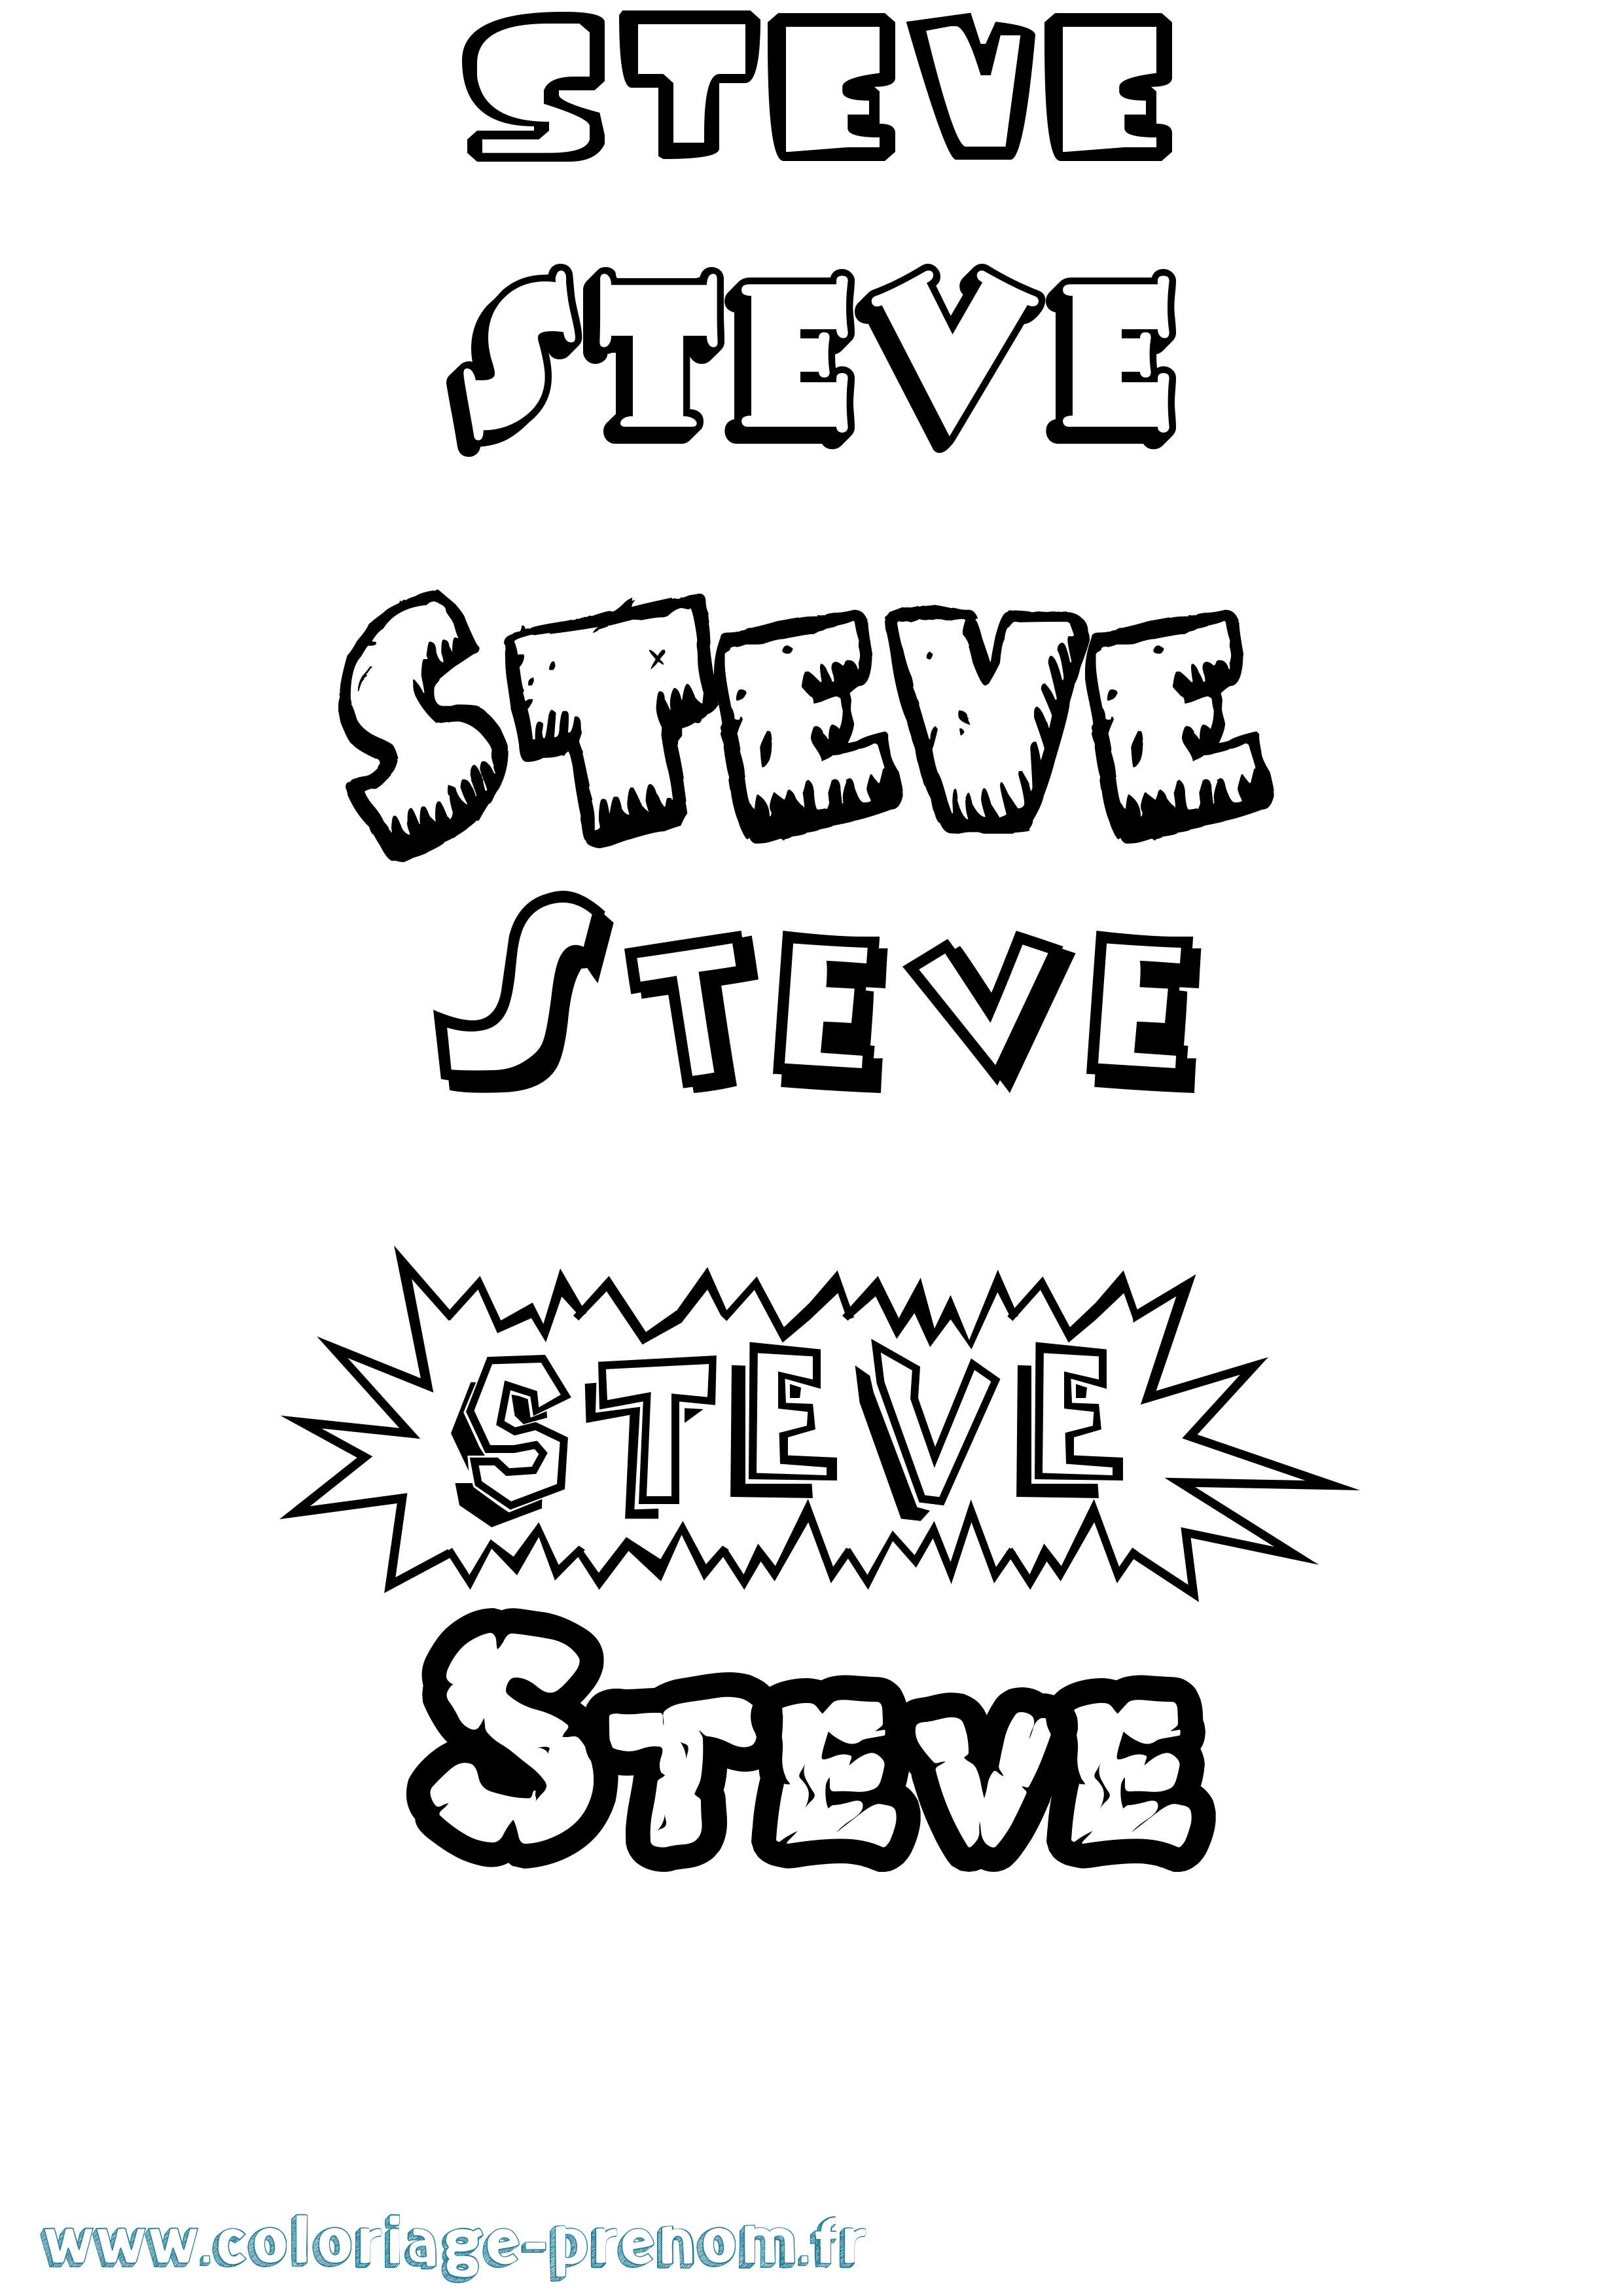 Coloriage prénom Steve